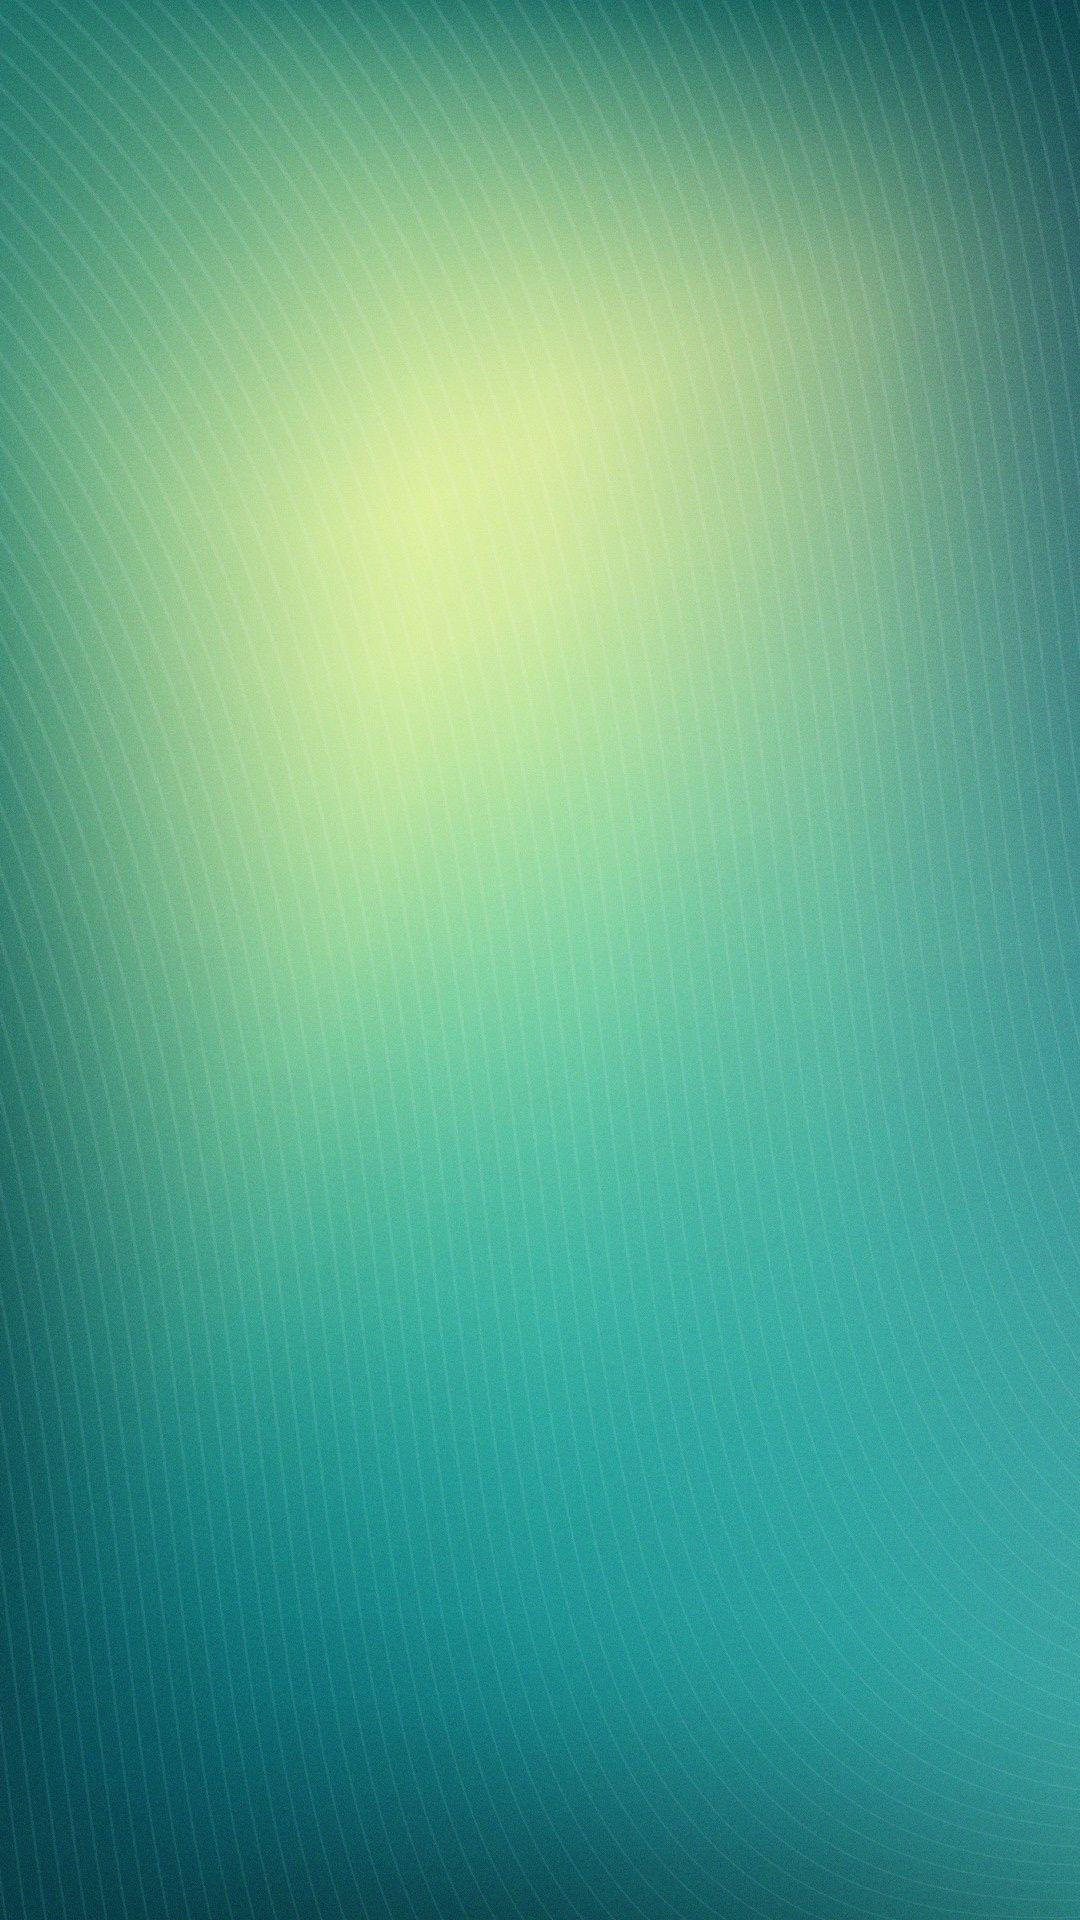 Green gradient. 18 Calming blurred lights and gradients wallpaper